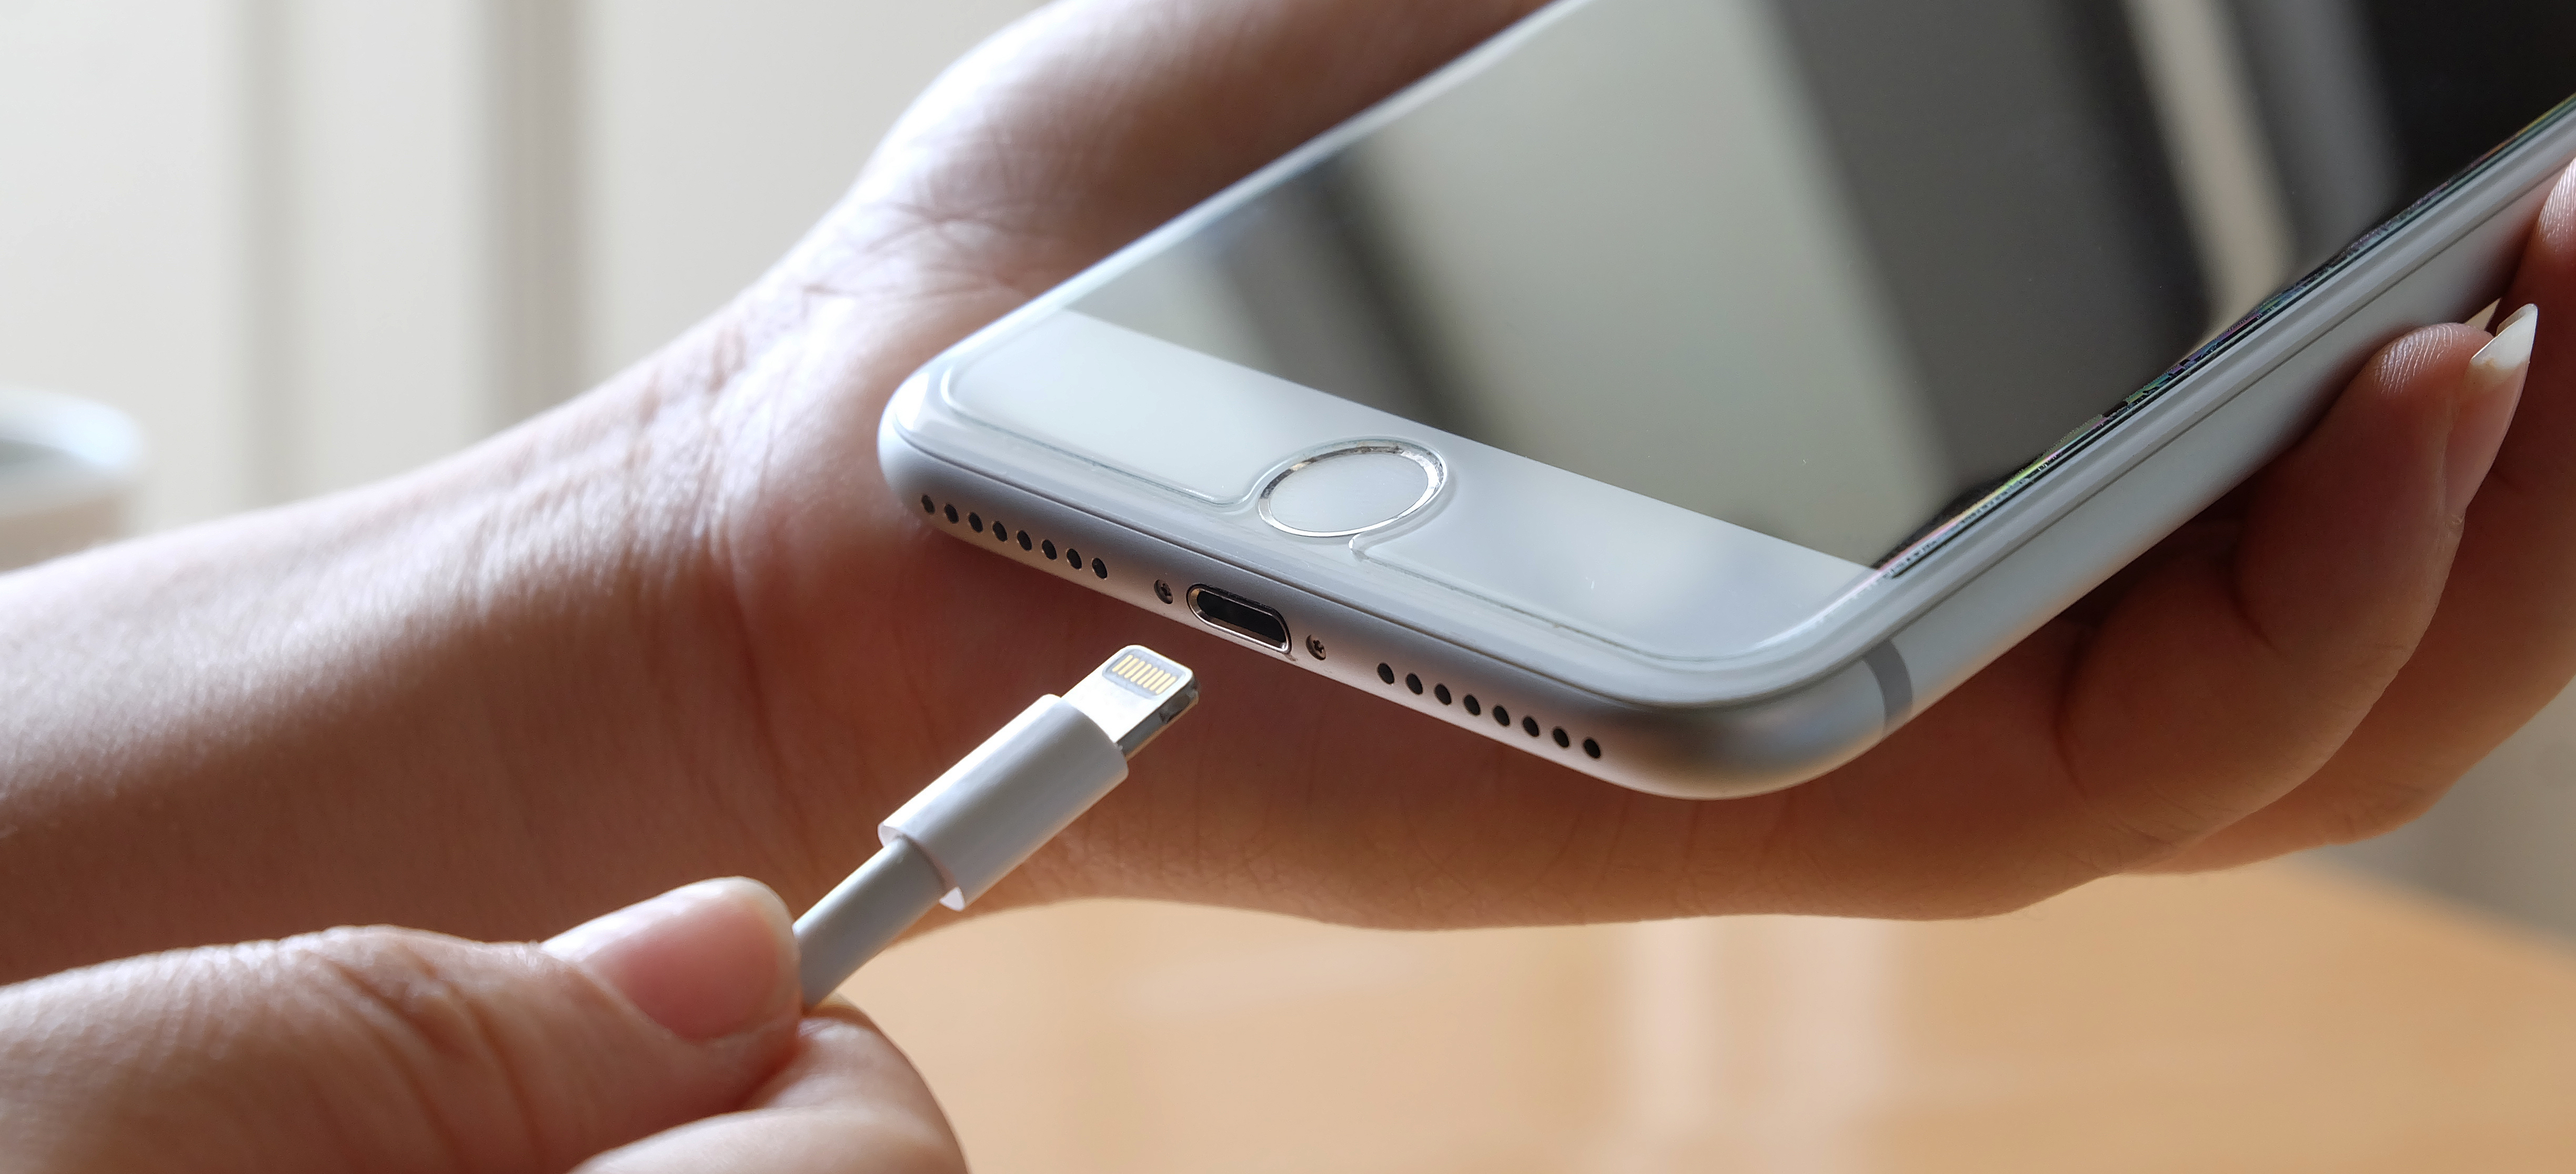 Apple iPhone bug problems battery camera storage